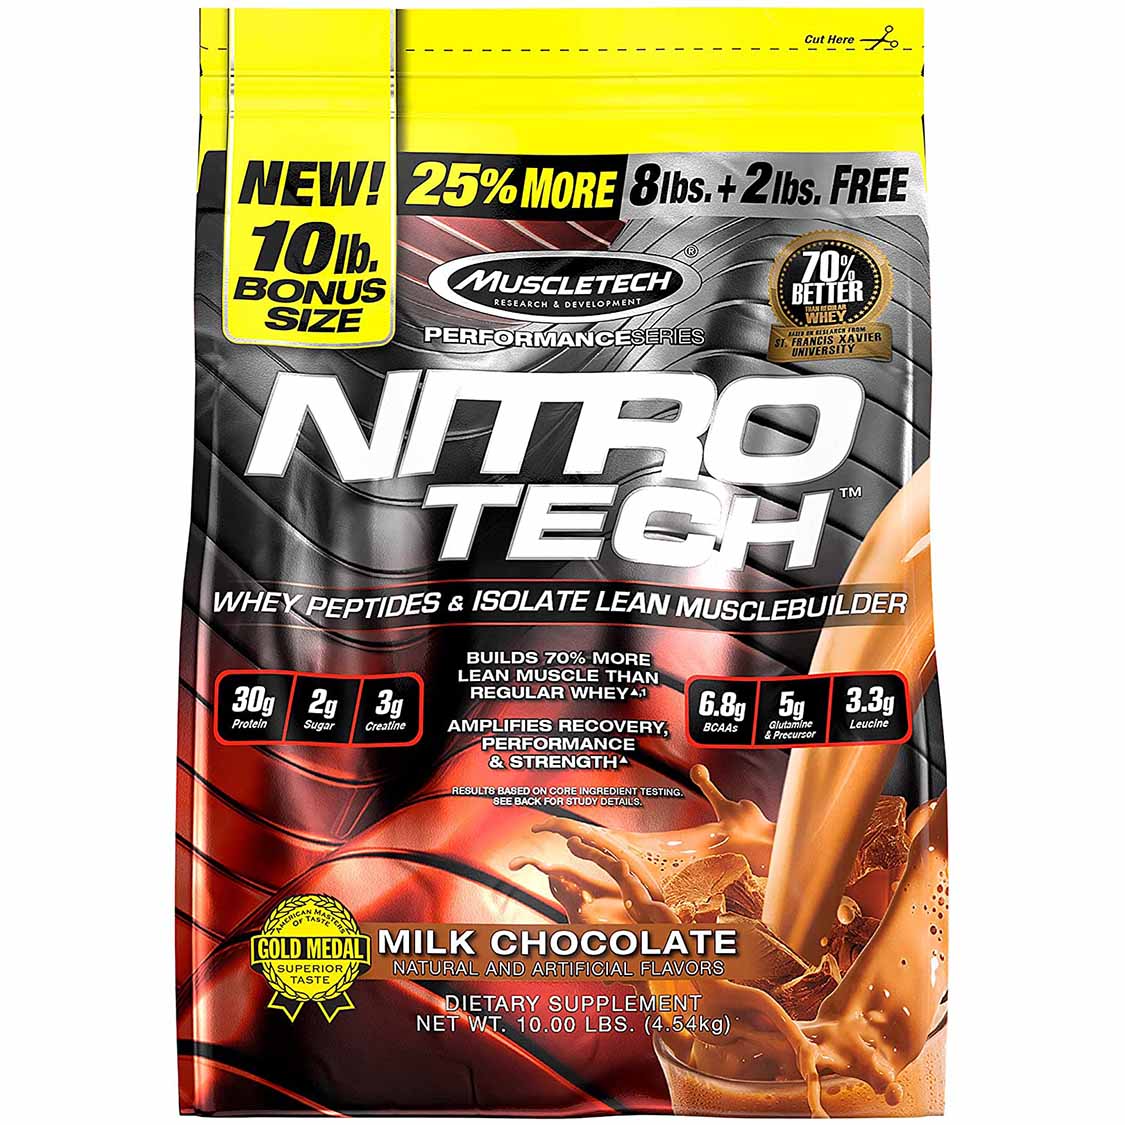 Muscletech Nitro Tech Whey Protein, Milk Chocolate, 10 LB